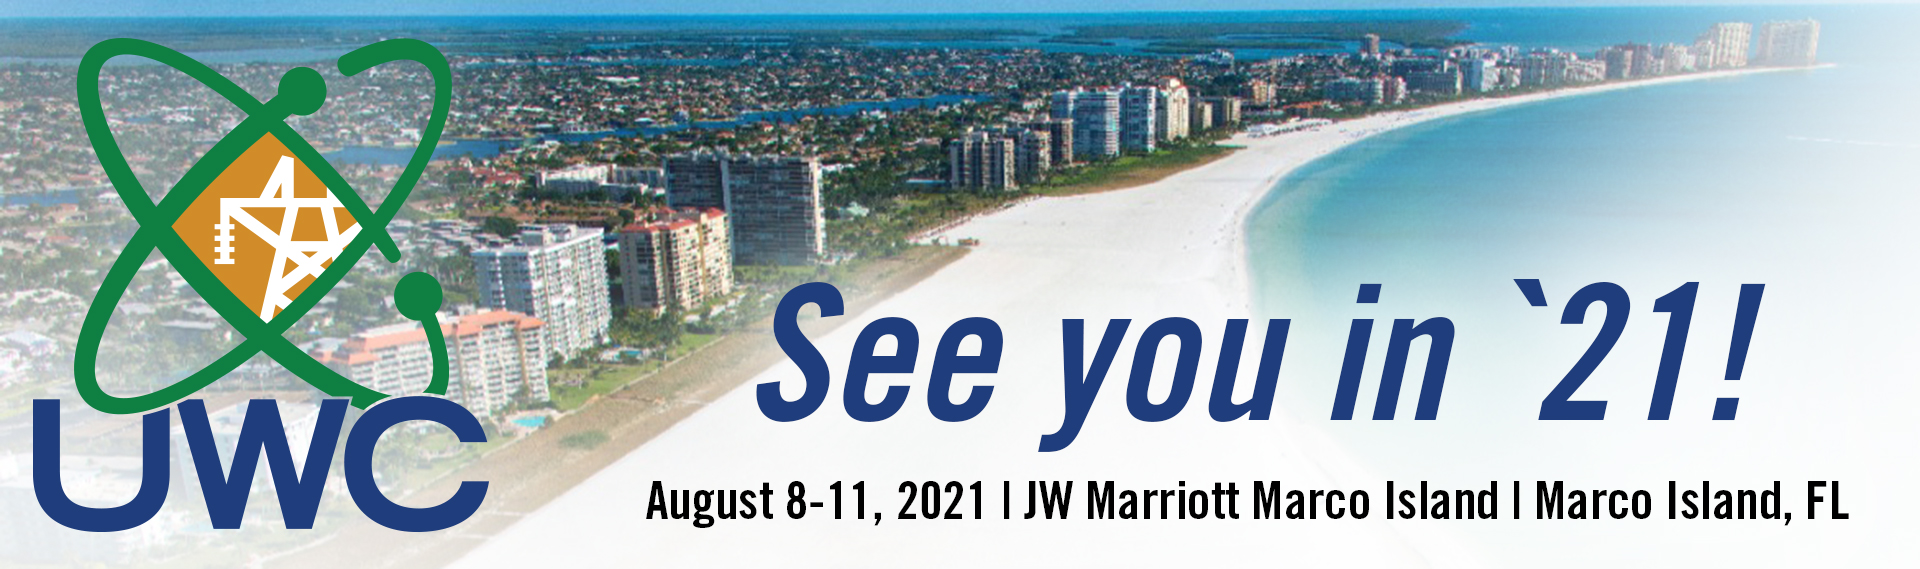 See you in '21 UWC: August 8-11, JW Mariott Marco Island, Marco Island , FL